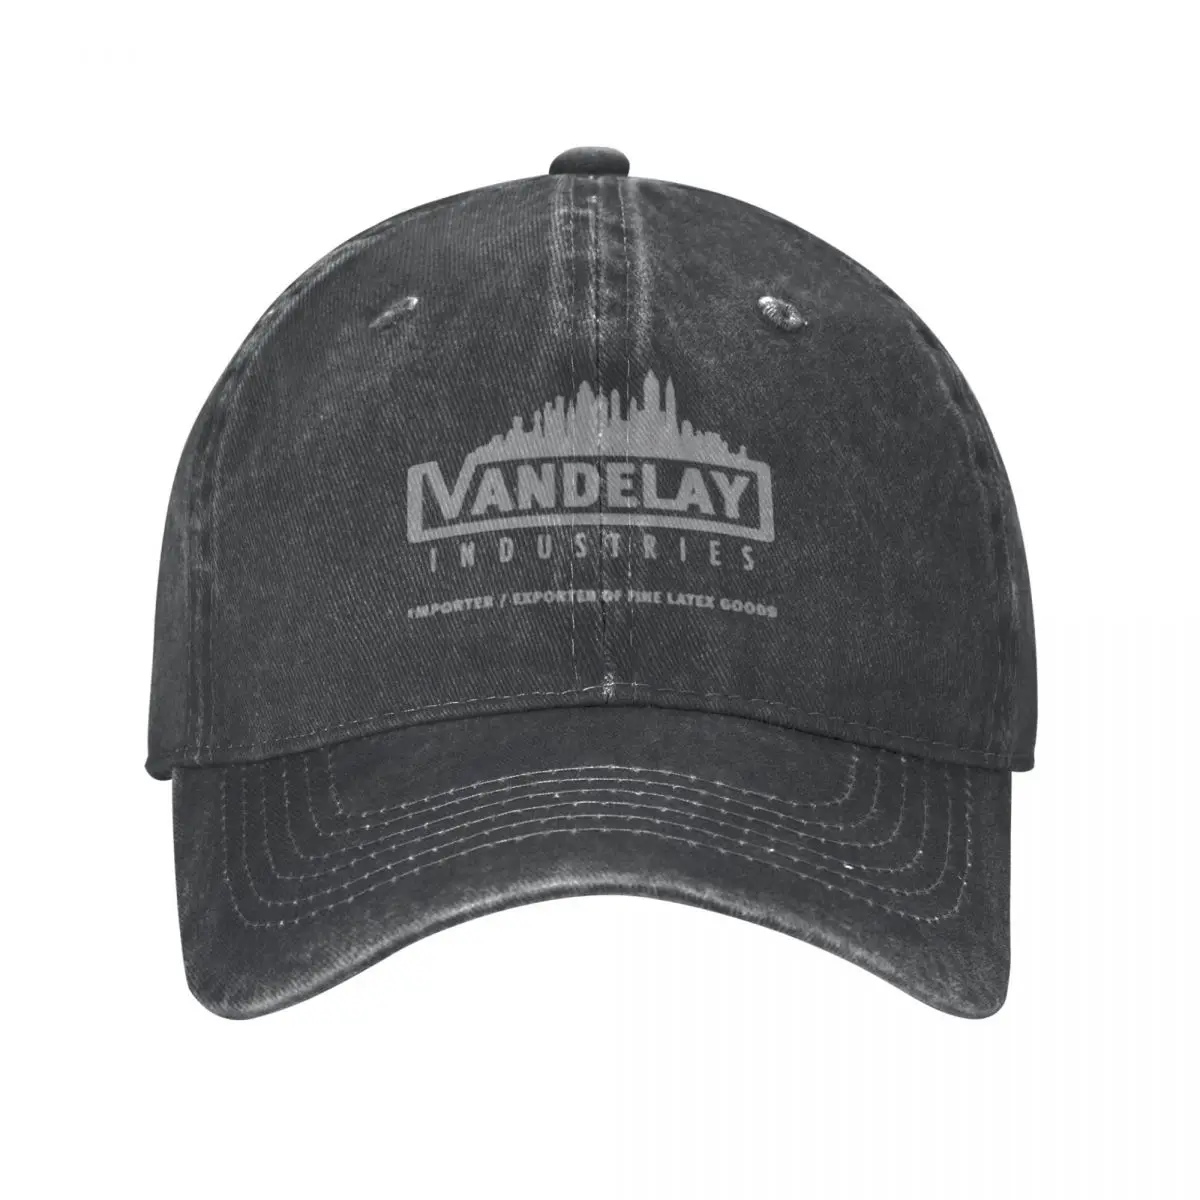 BEST SELLER - Vandelay Industries Merchandise Baseball Caps Denim Hats Outdoor Adjustable Casquette Sports Baseball Cowboy Hat